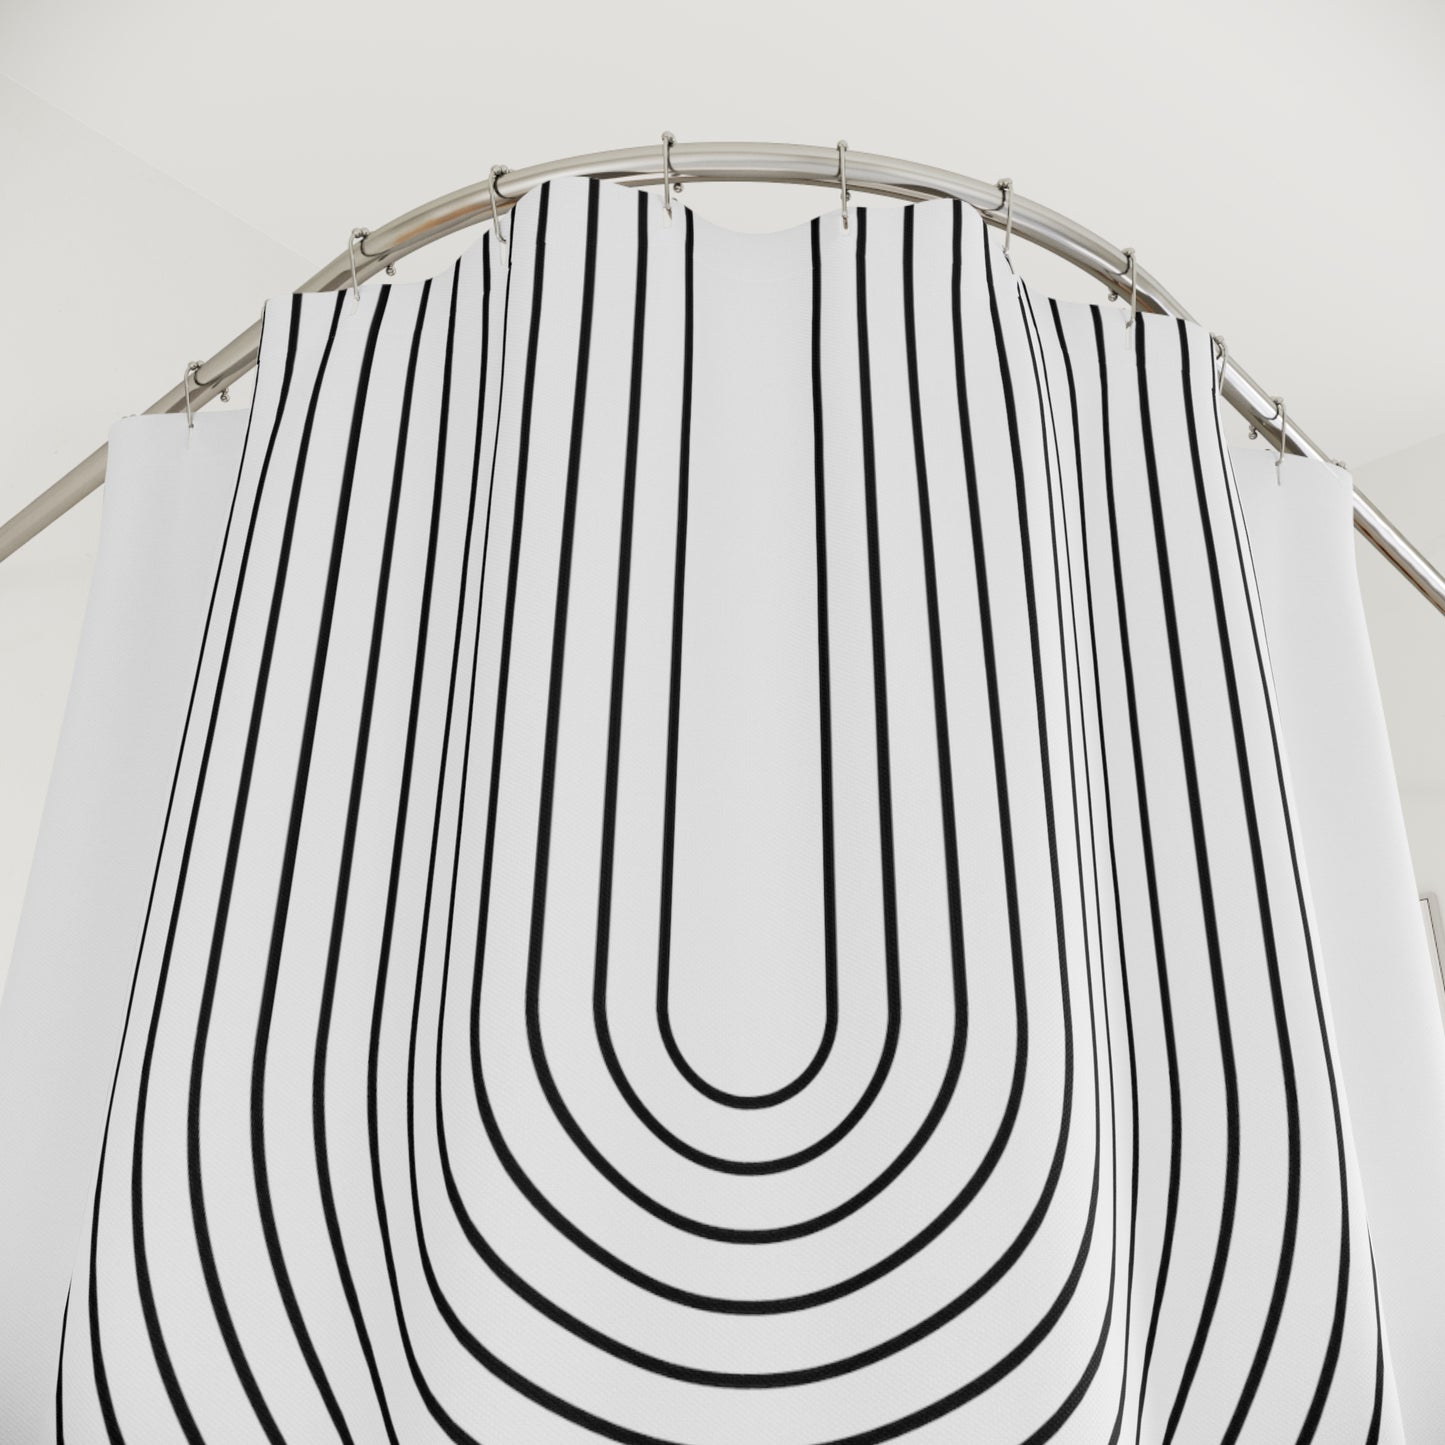 Boho Geometric Art Shower Curtain (1)